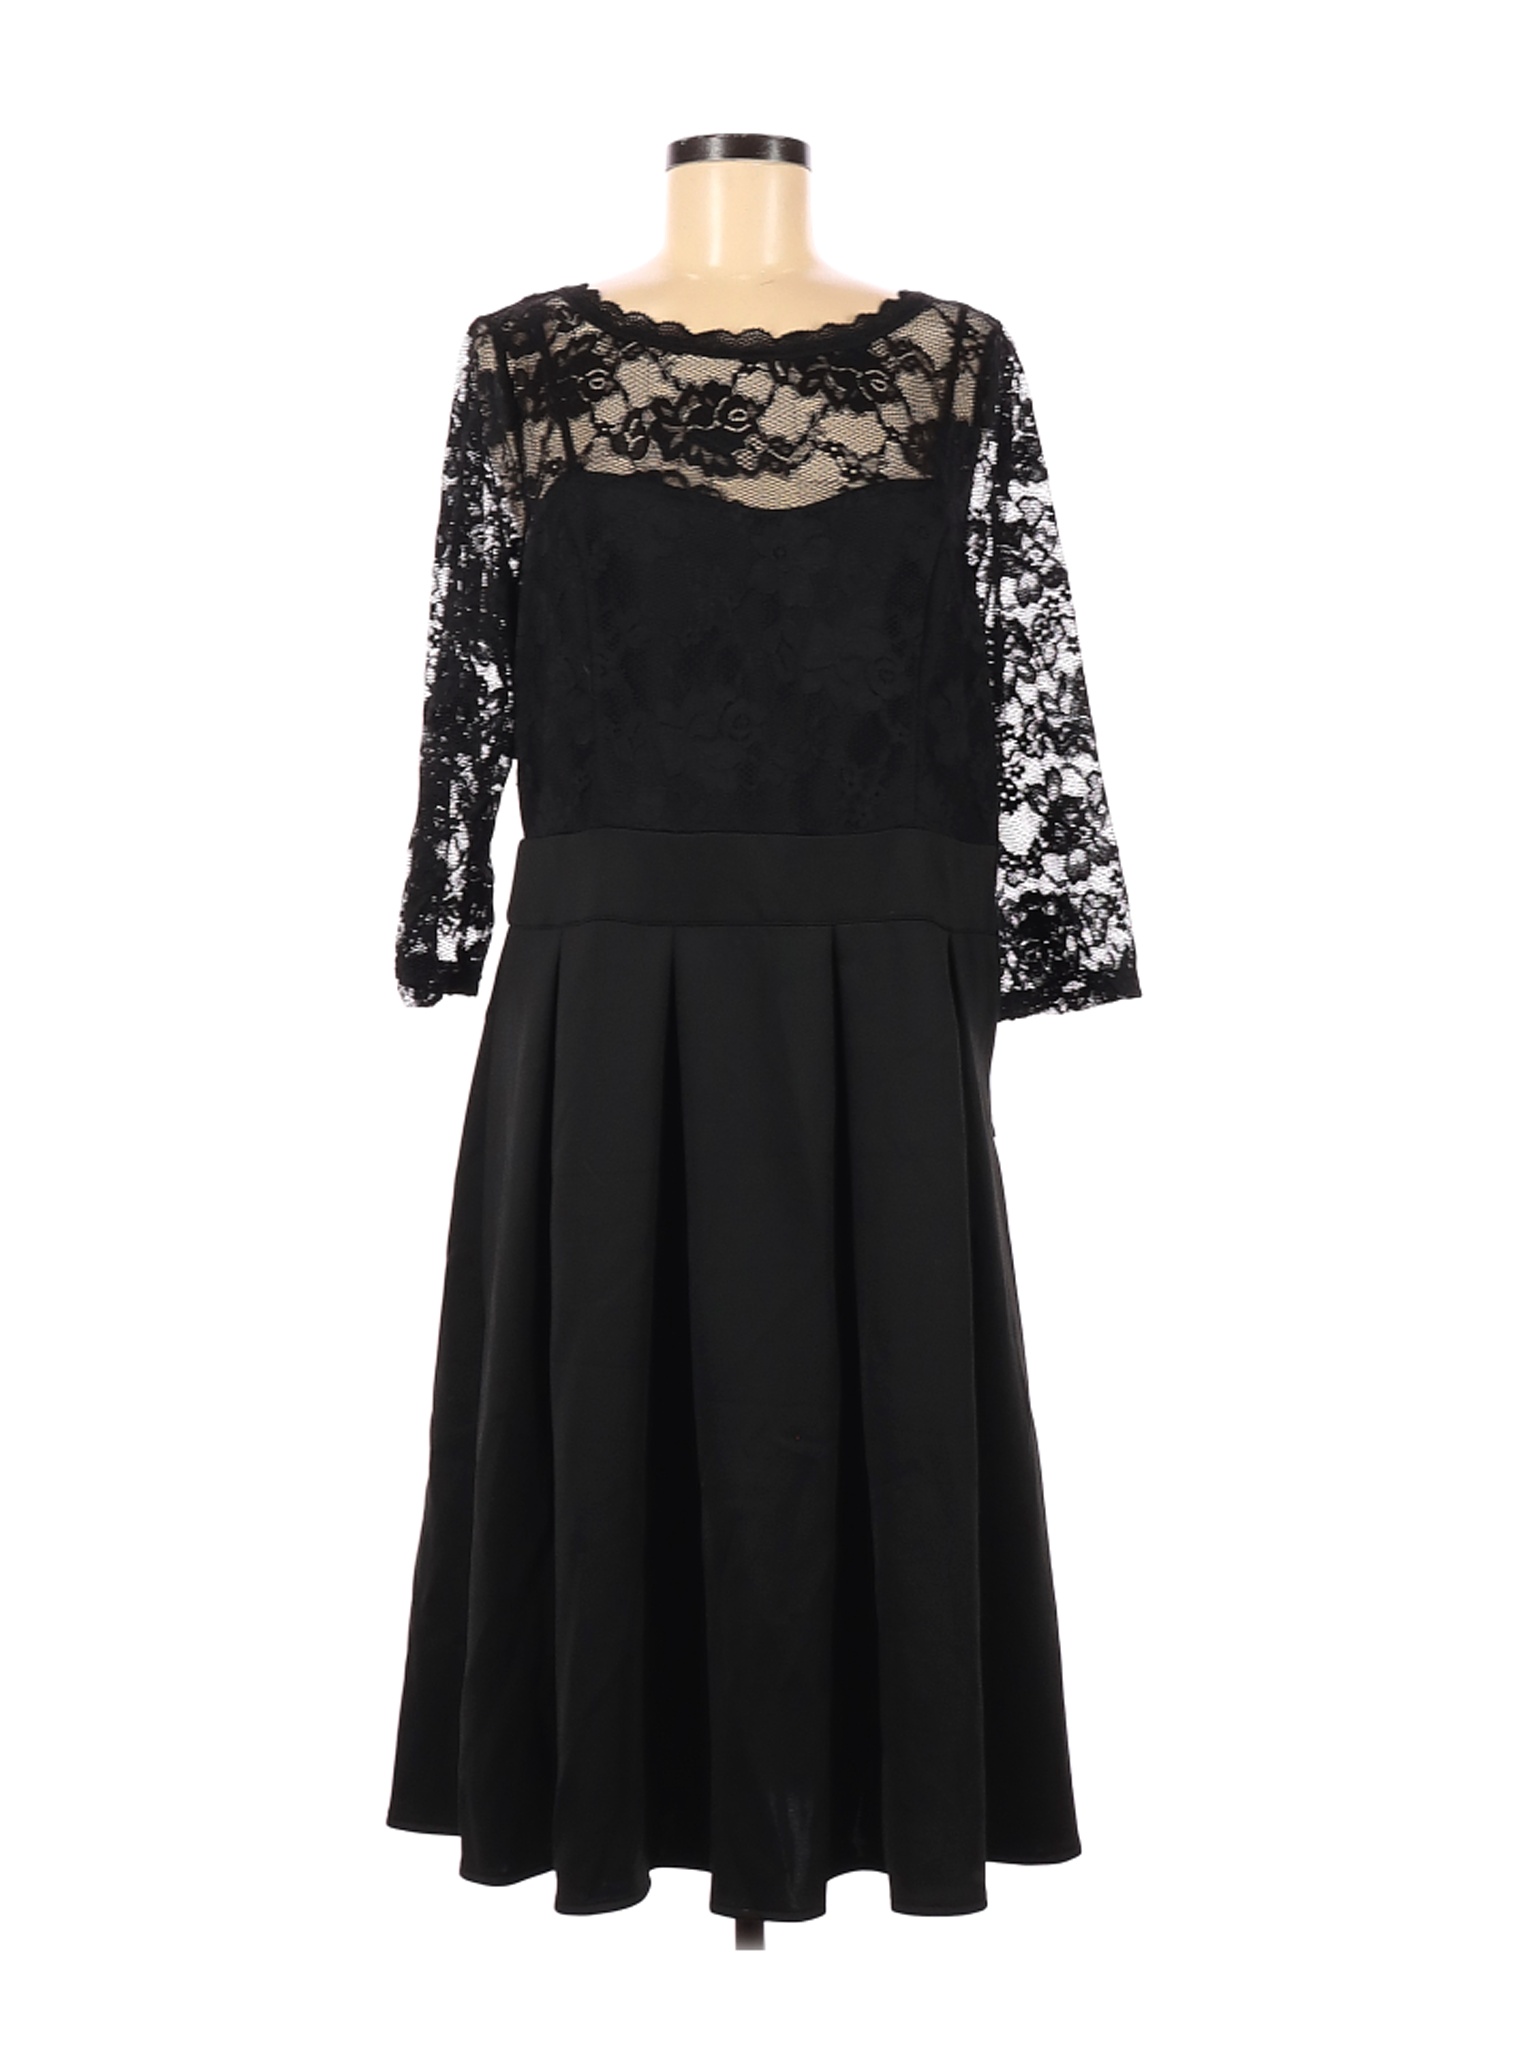 Miusol Solid Black Cocktail Dress Size M - 59% off | thredUP